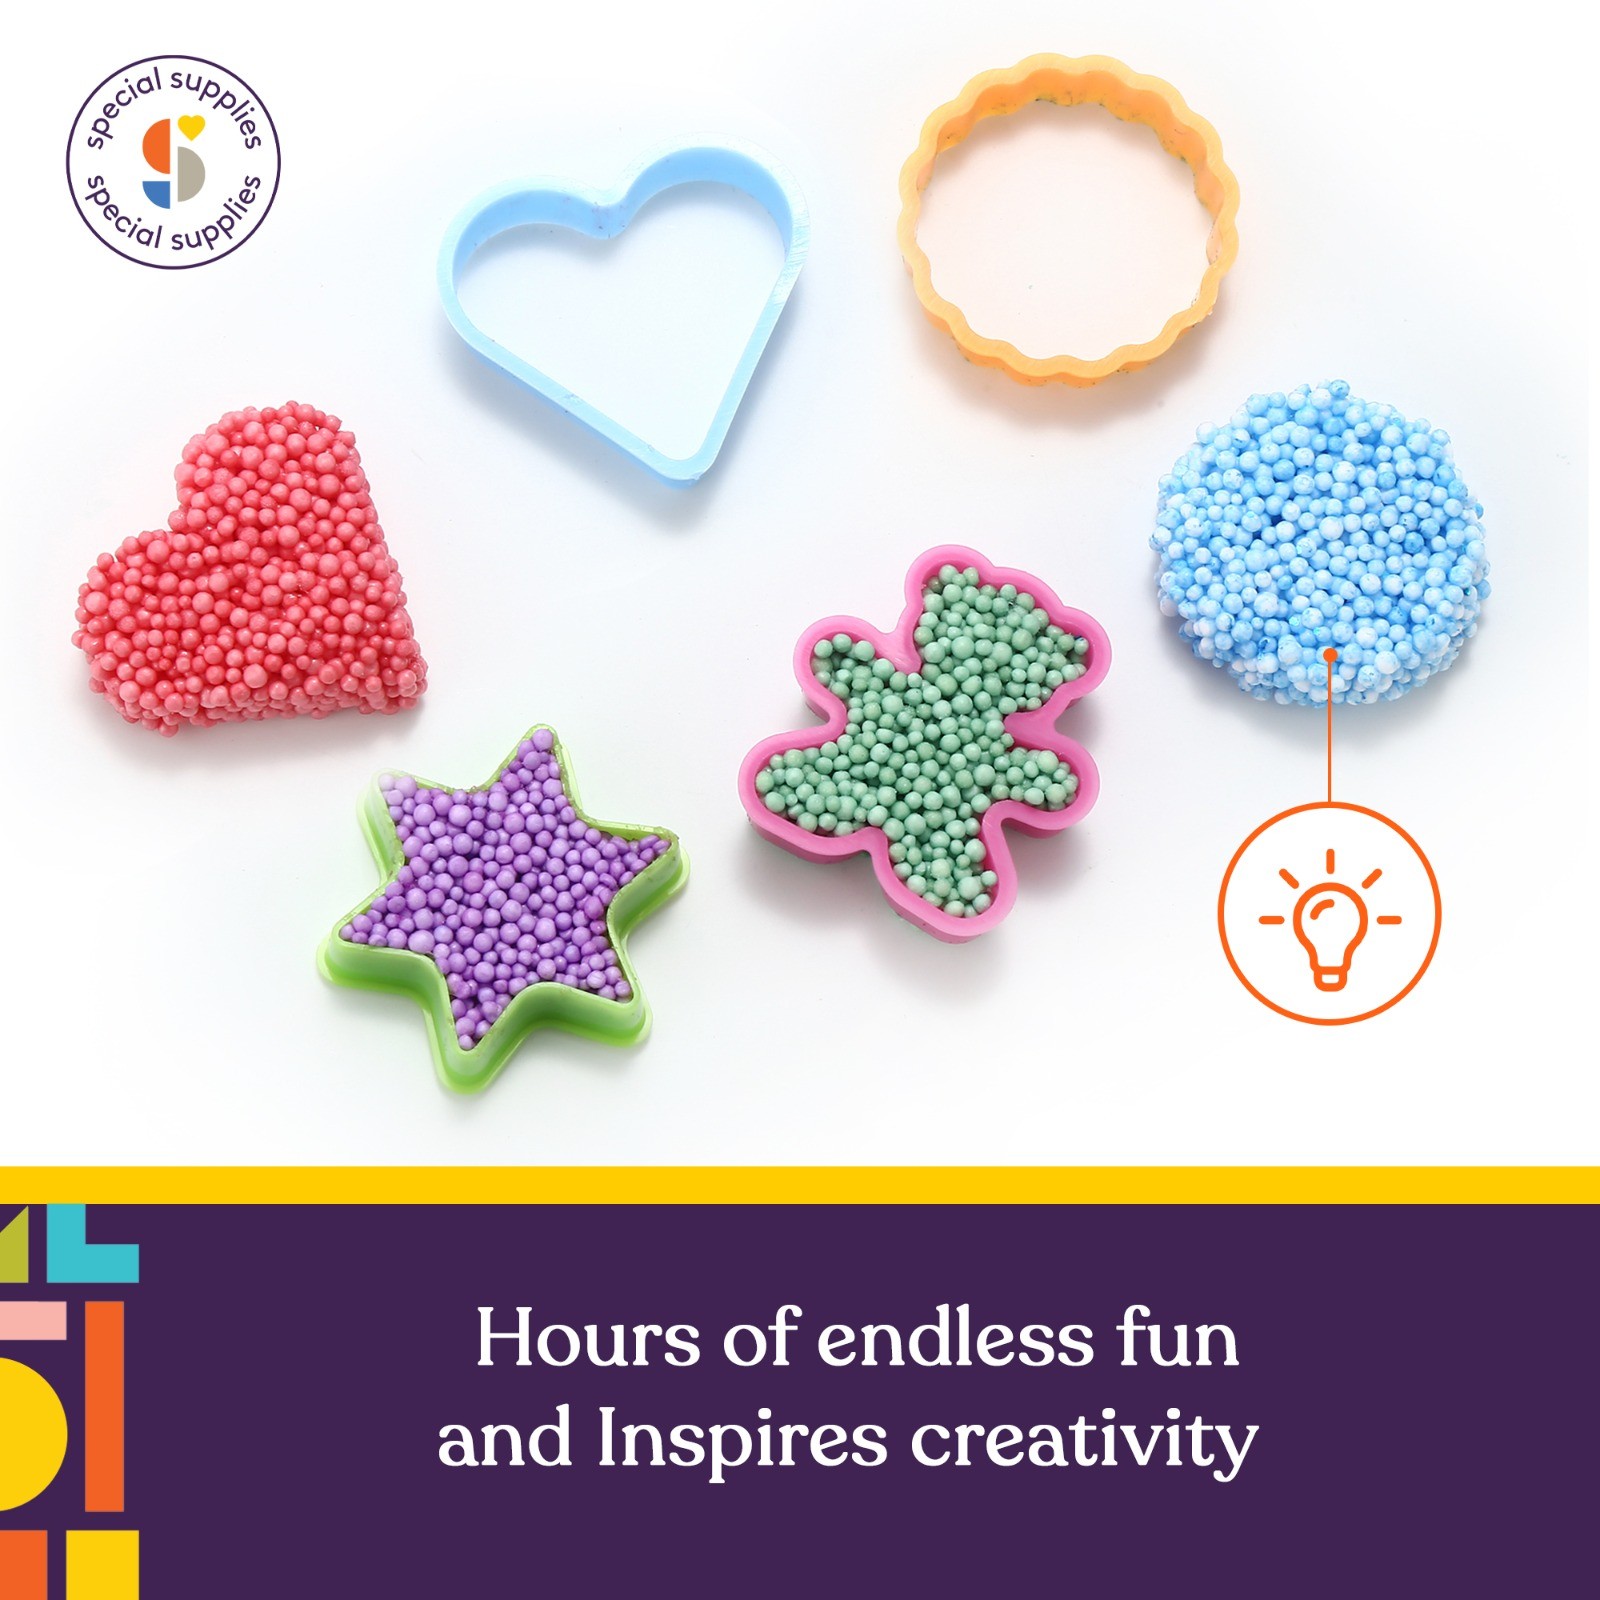 Special Supplies Fun Foam Modeling Foam Beads Play Kit, 12 Blocks  Children’s Educational Clay for Arts Crafts Kindergarten, Preschool Kids  Toys